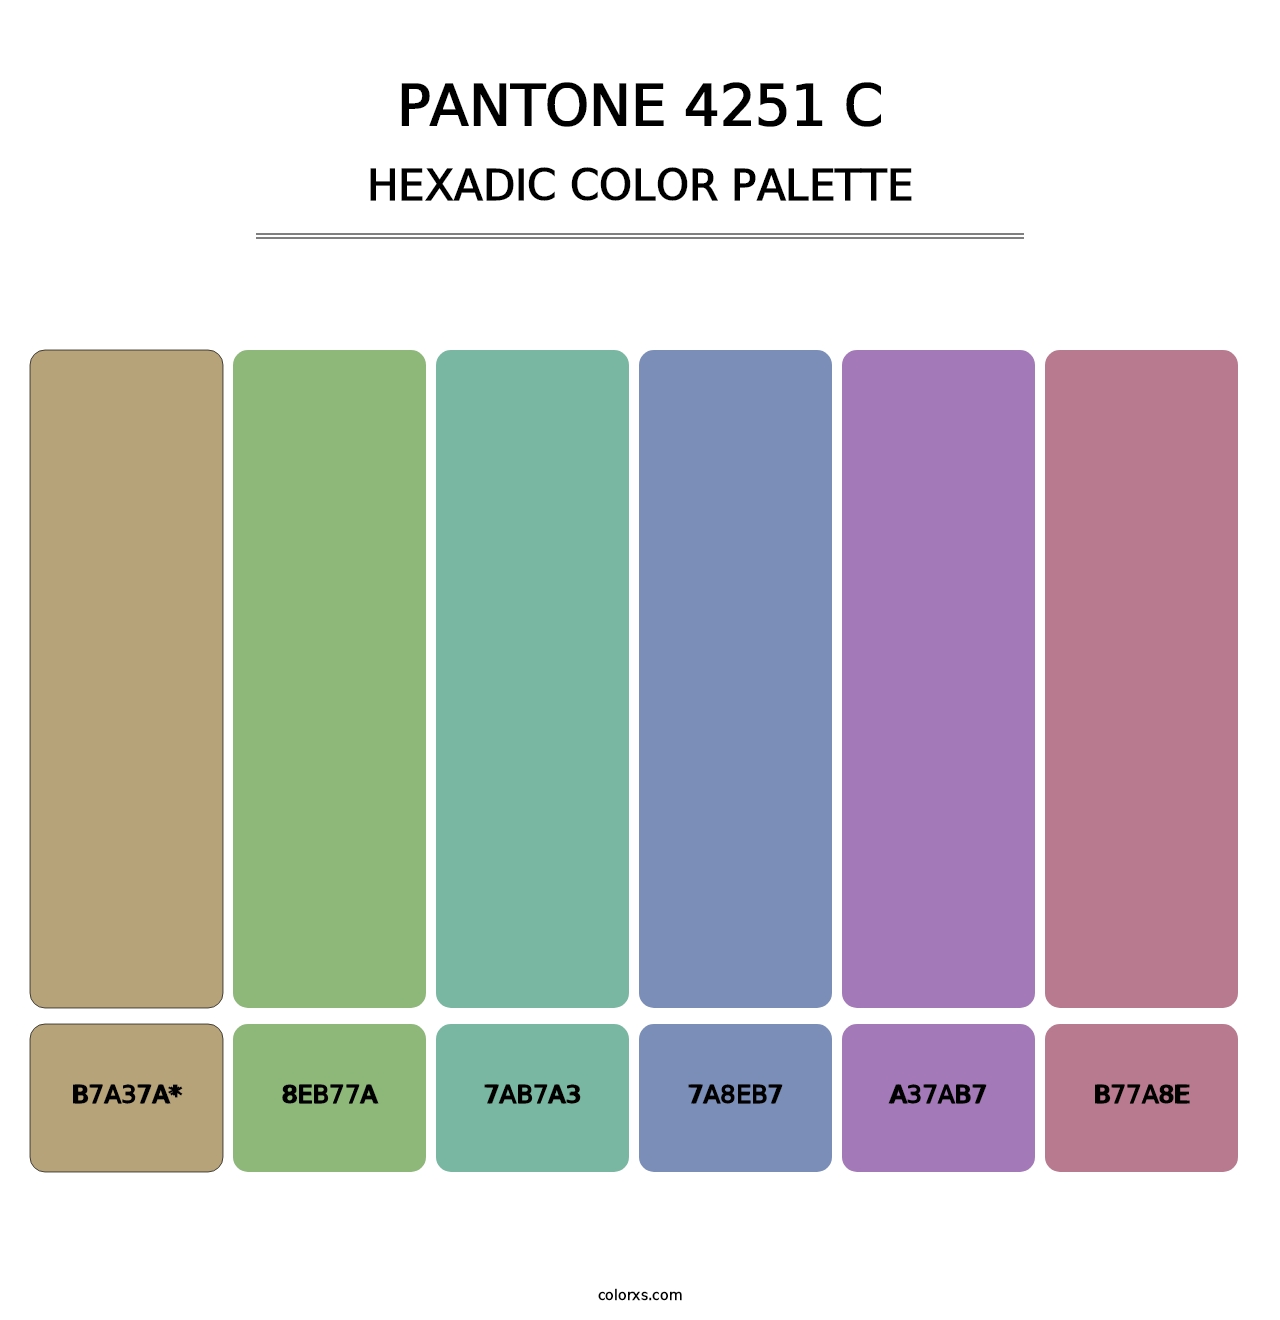 PANTONE 4251 C - Hexadic Color Palette